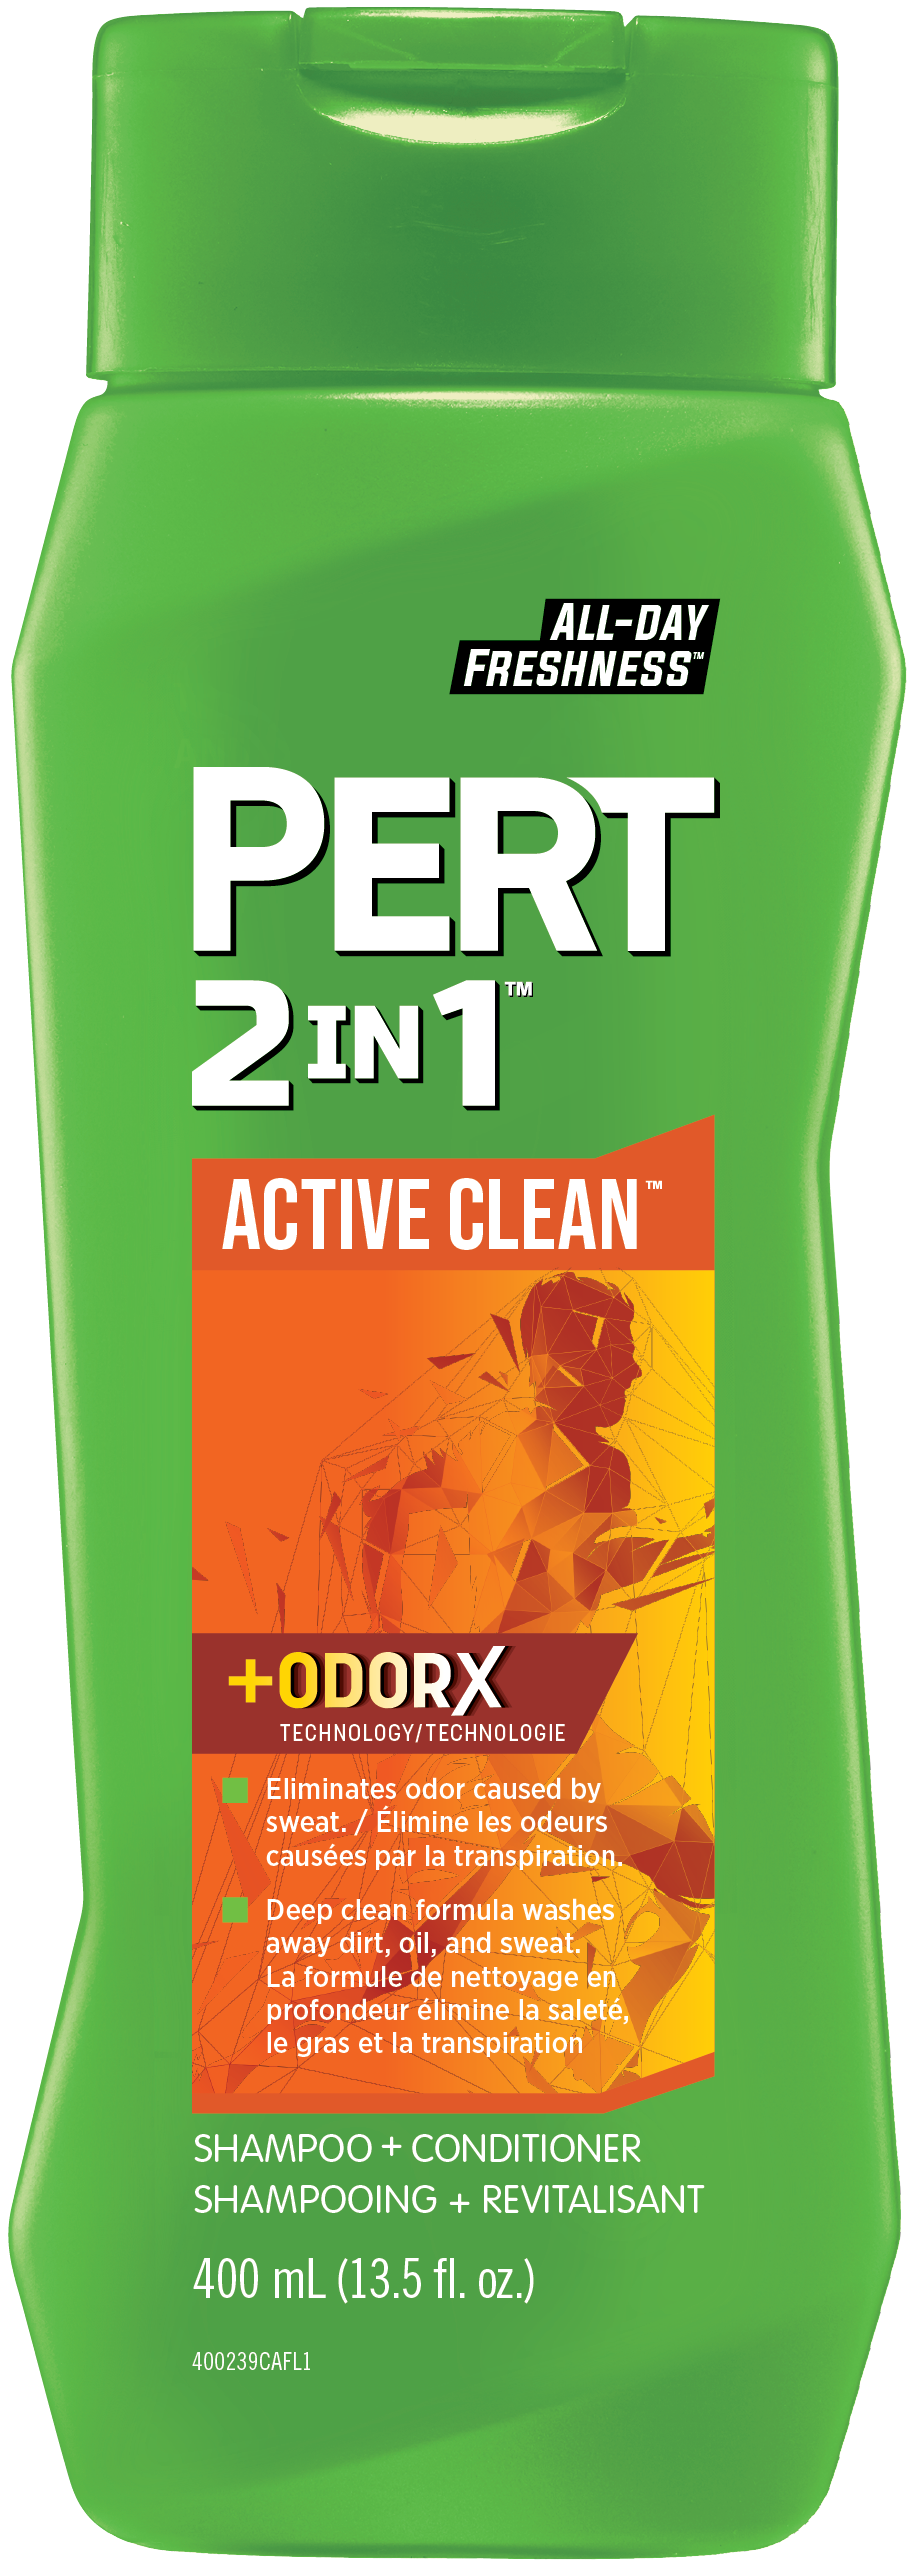 Pert Active Clean 2 In 1 Shampoo + Conditioner (400ml) - Quecan